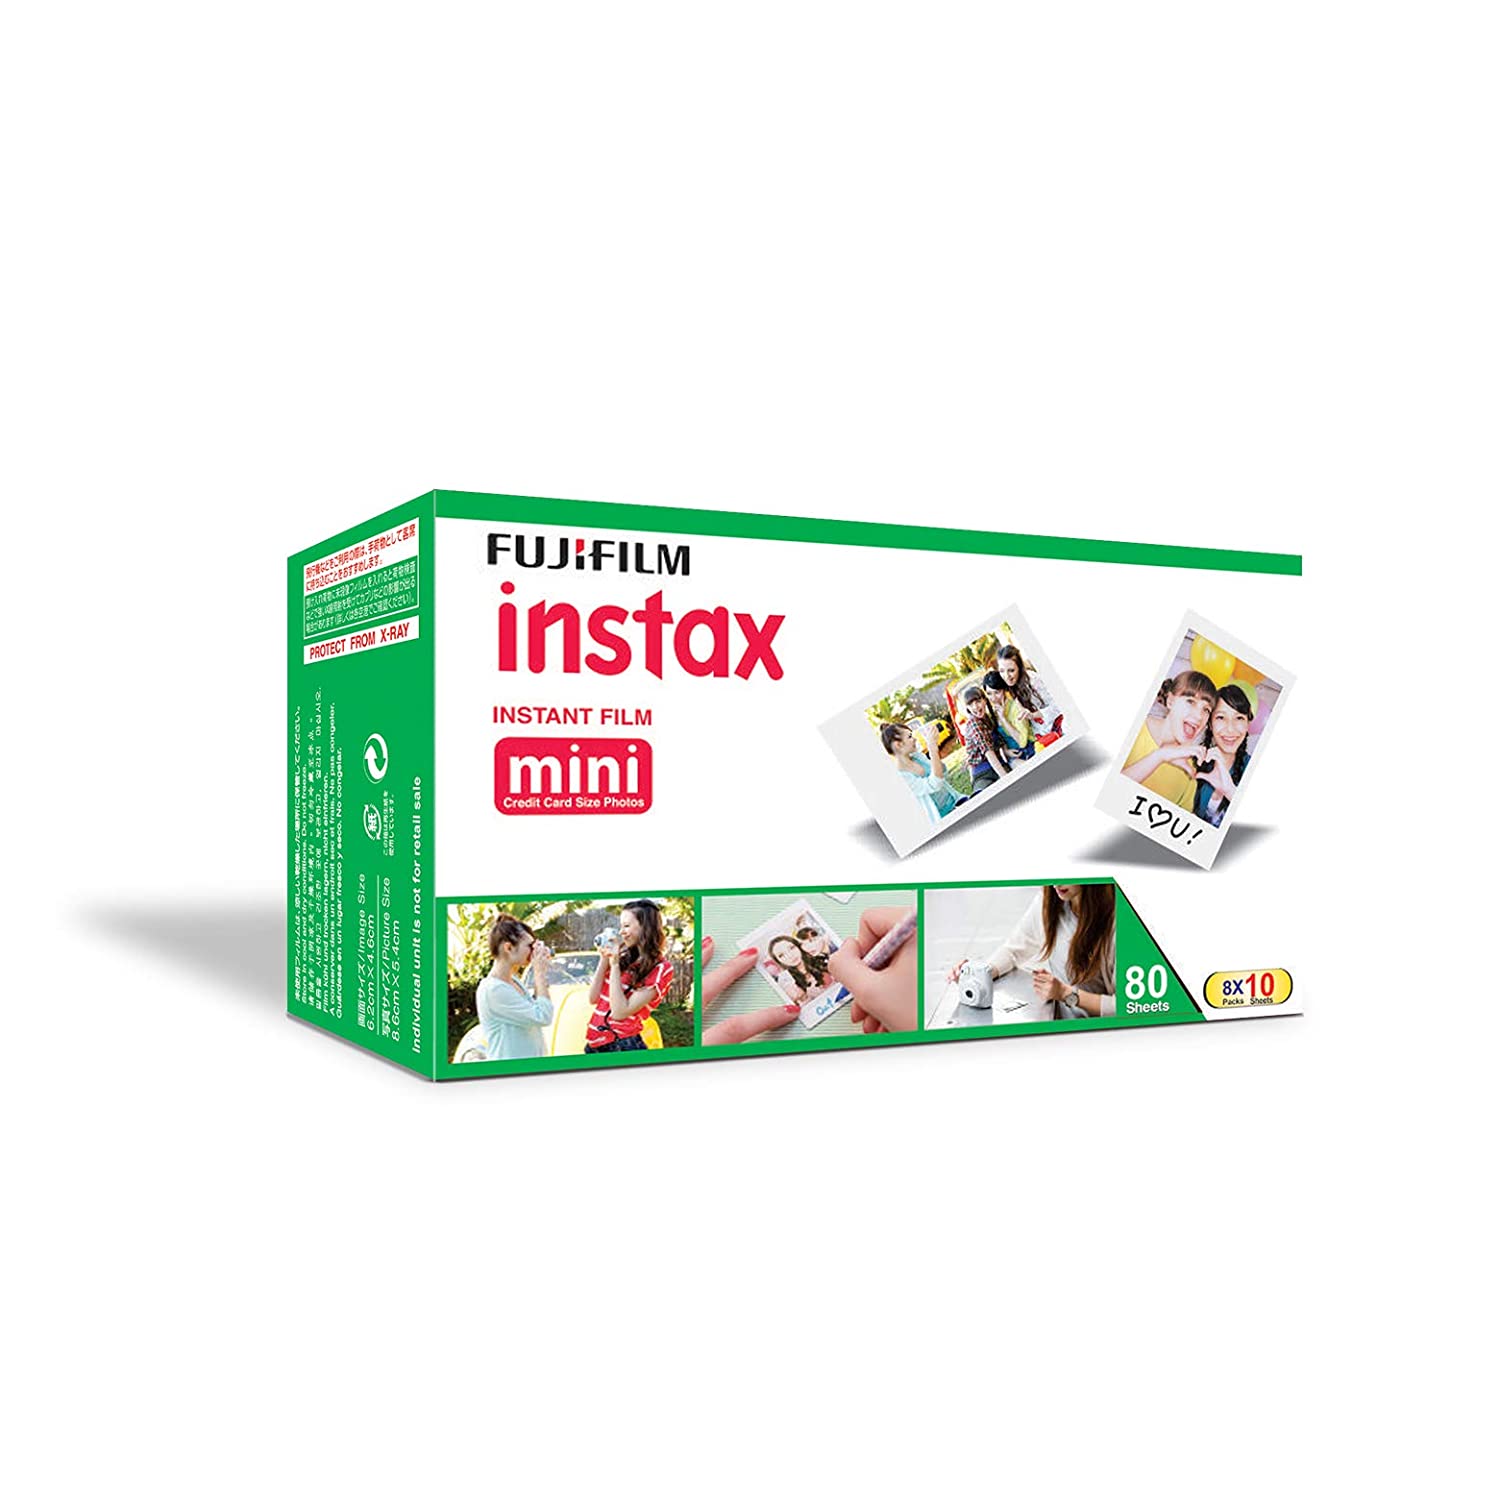 Fujifilm Instax Mini Picture Format Film - Value Pack 80 Shots Films (White)